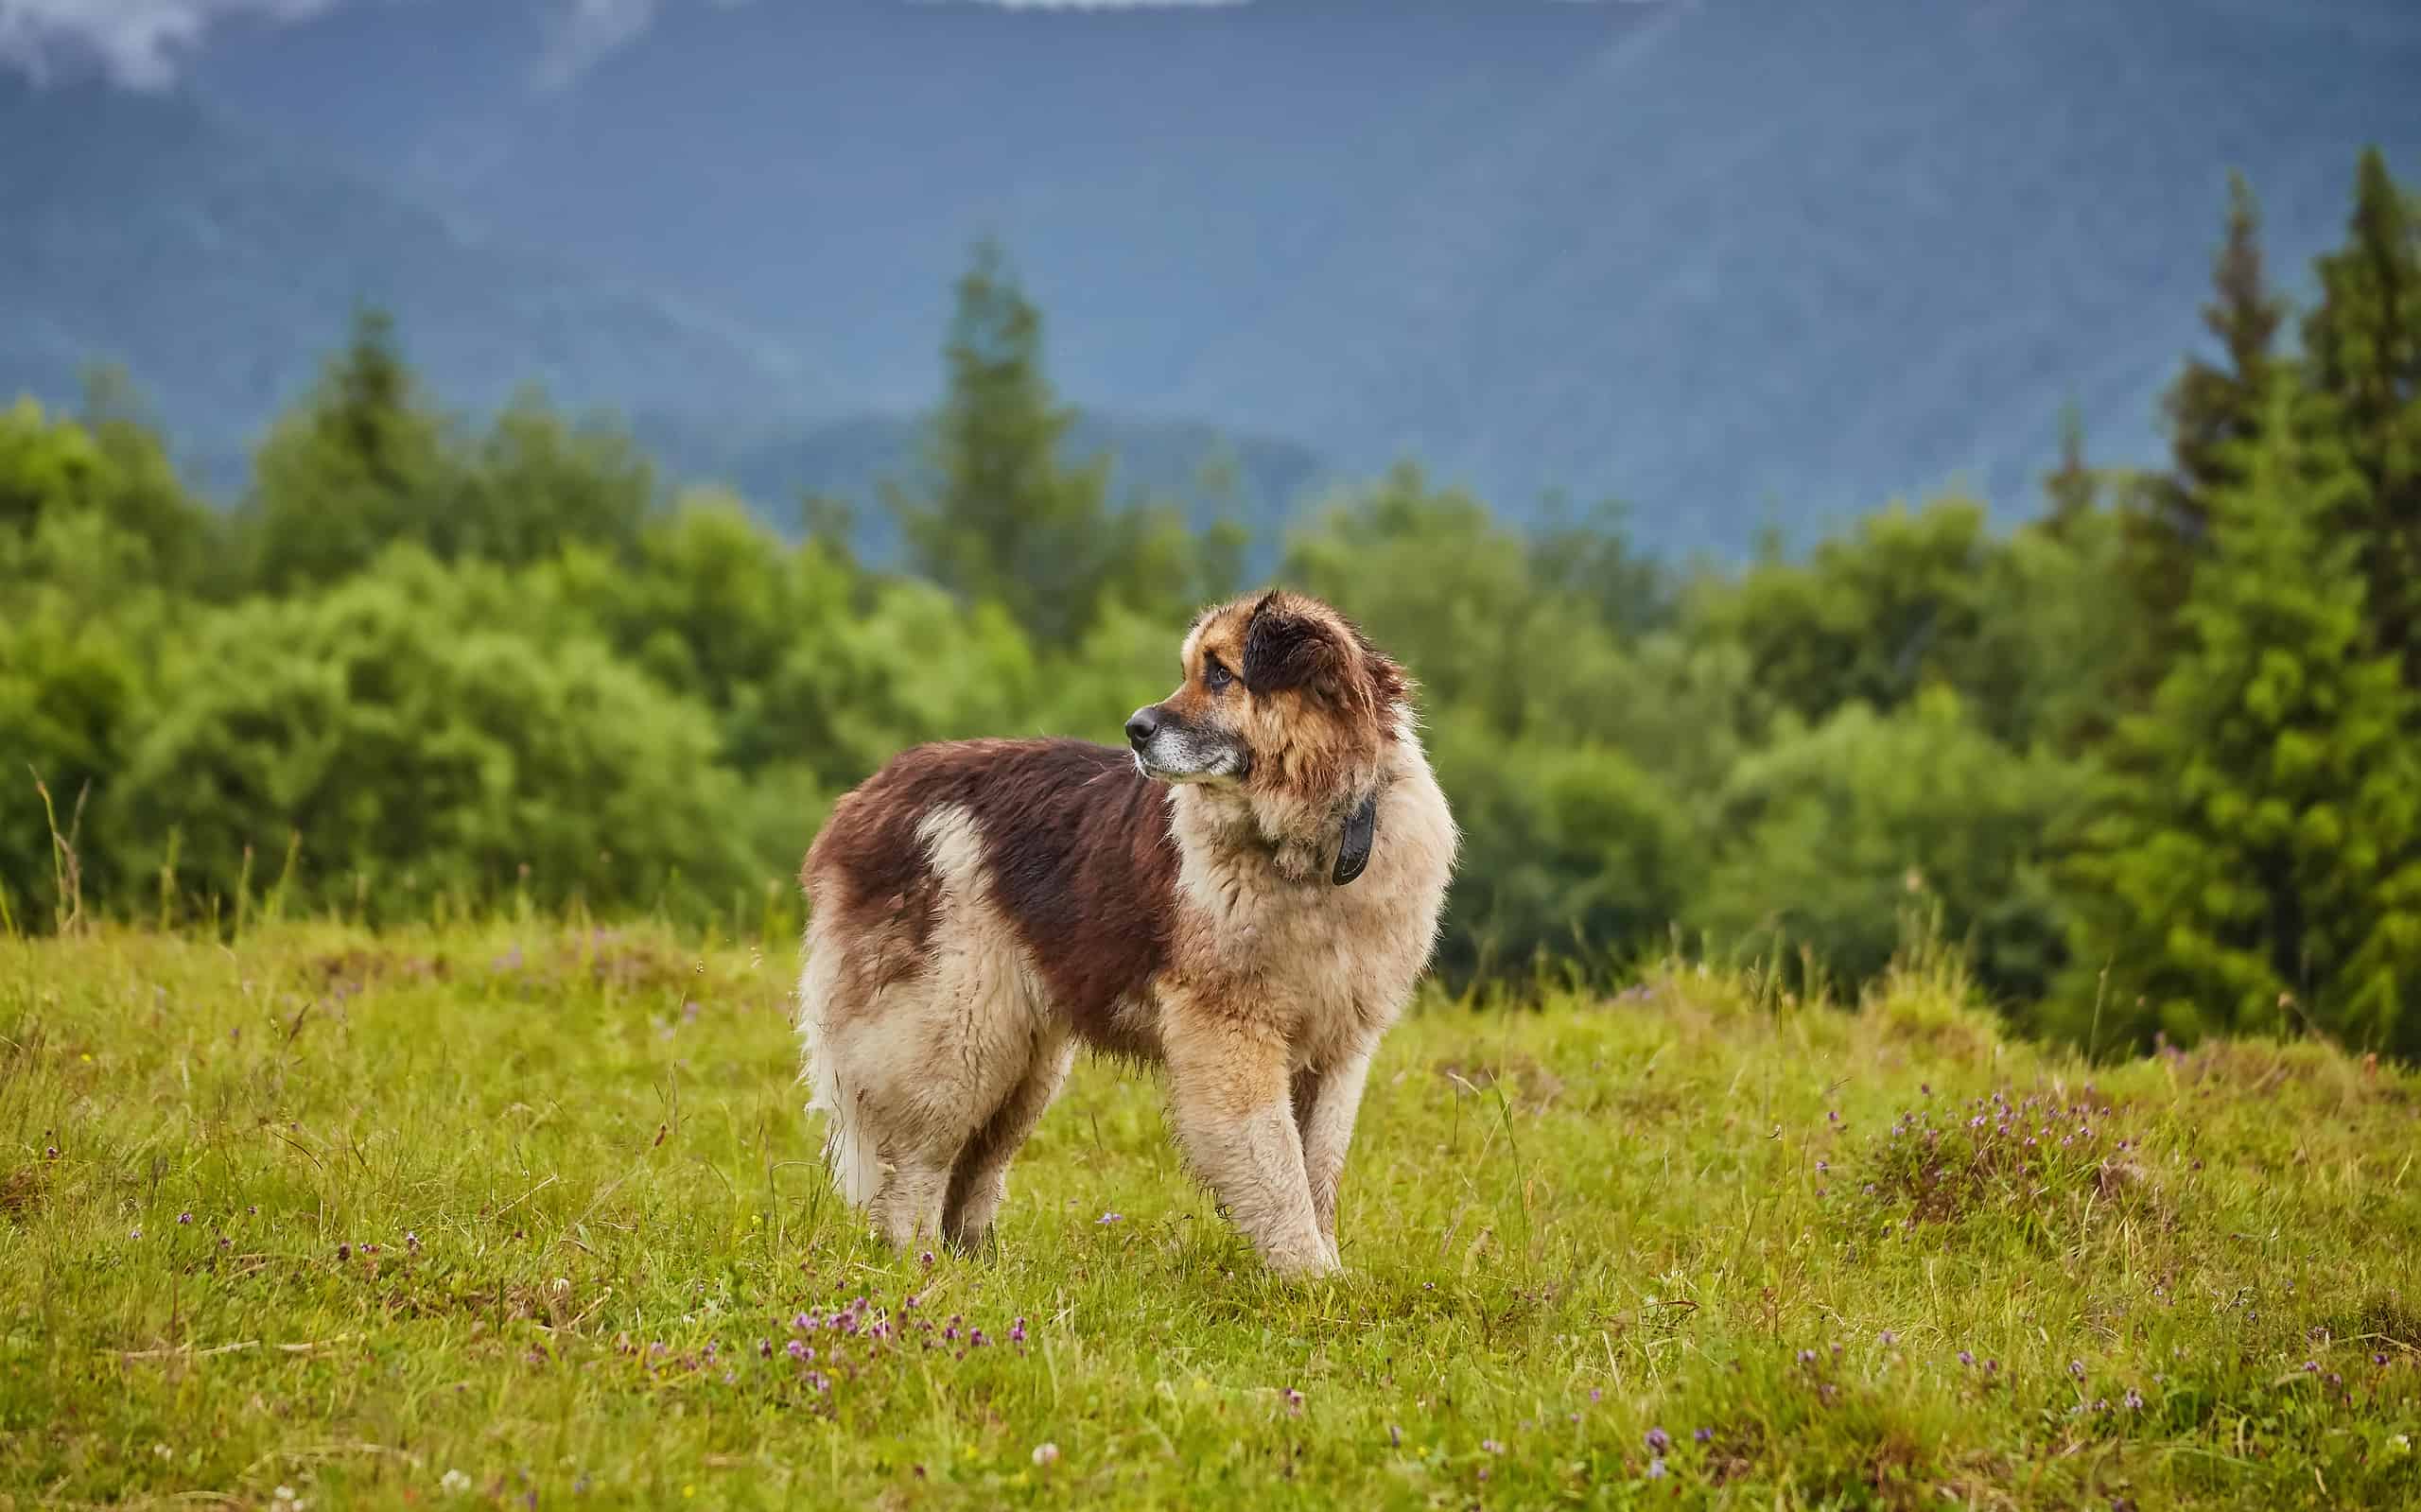 romanian shepherd dog standing on natural meadow, image taken near the sheep farm